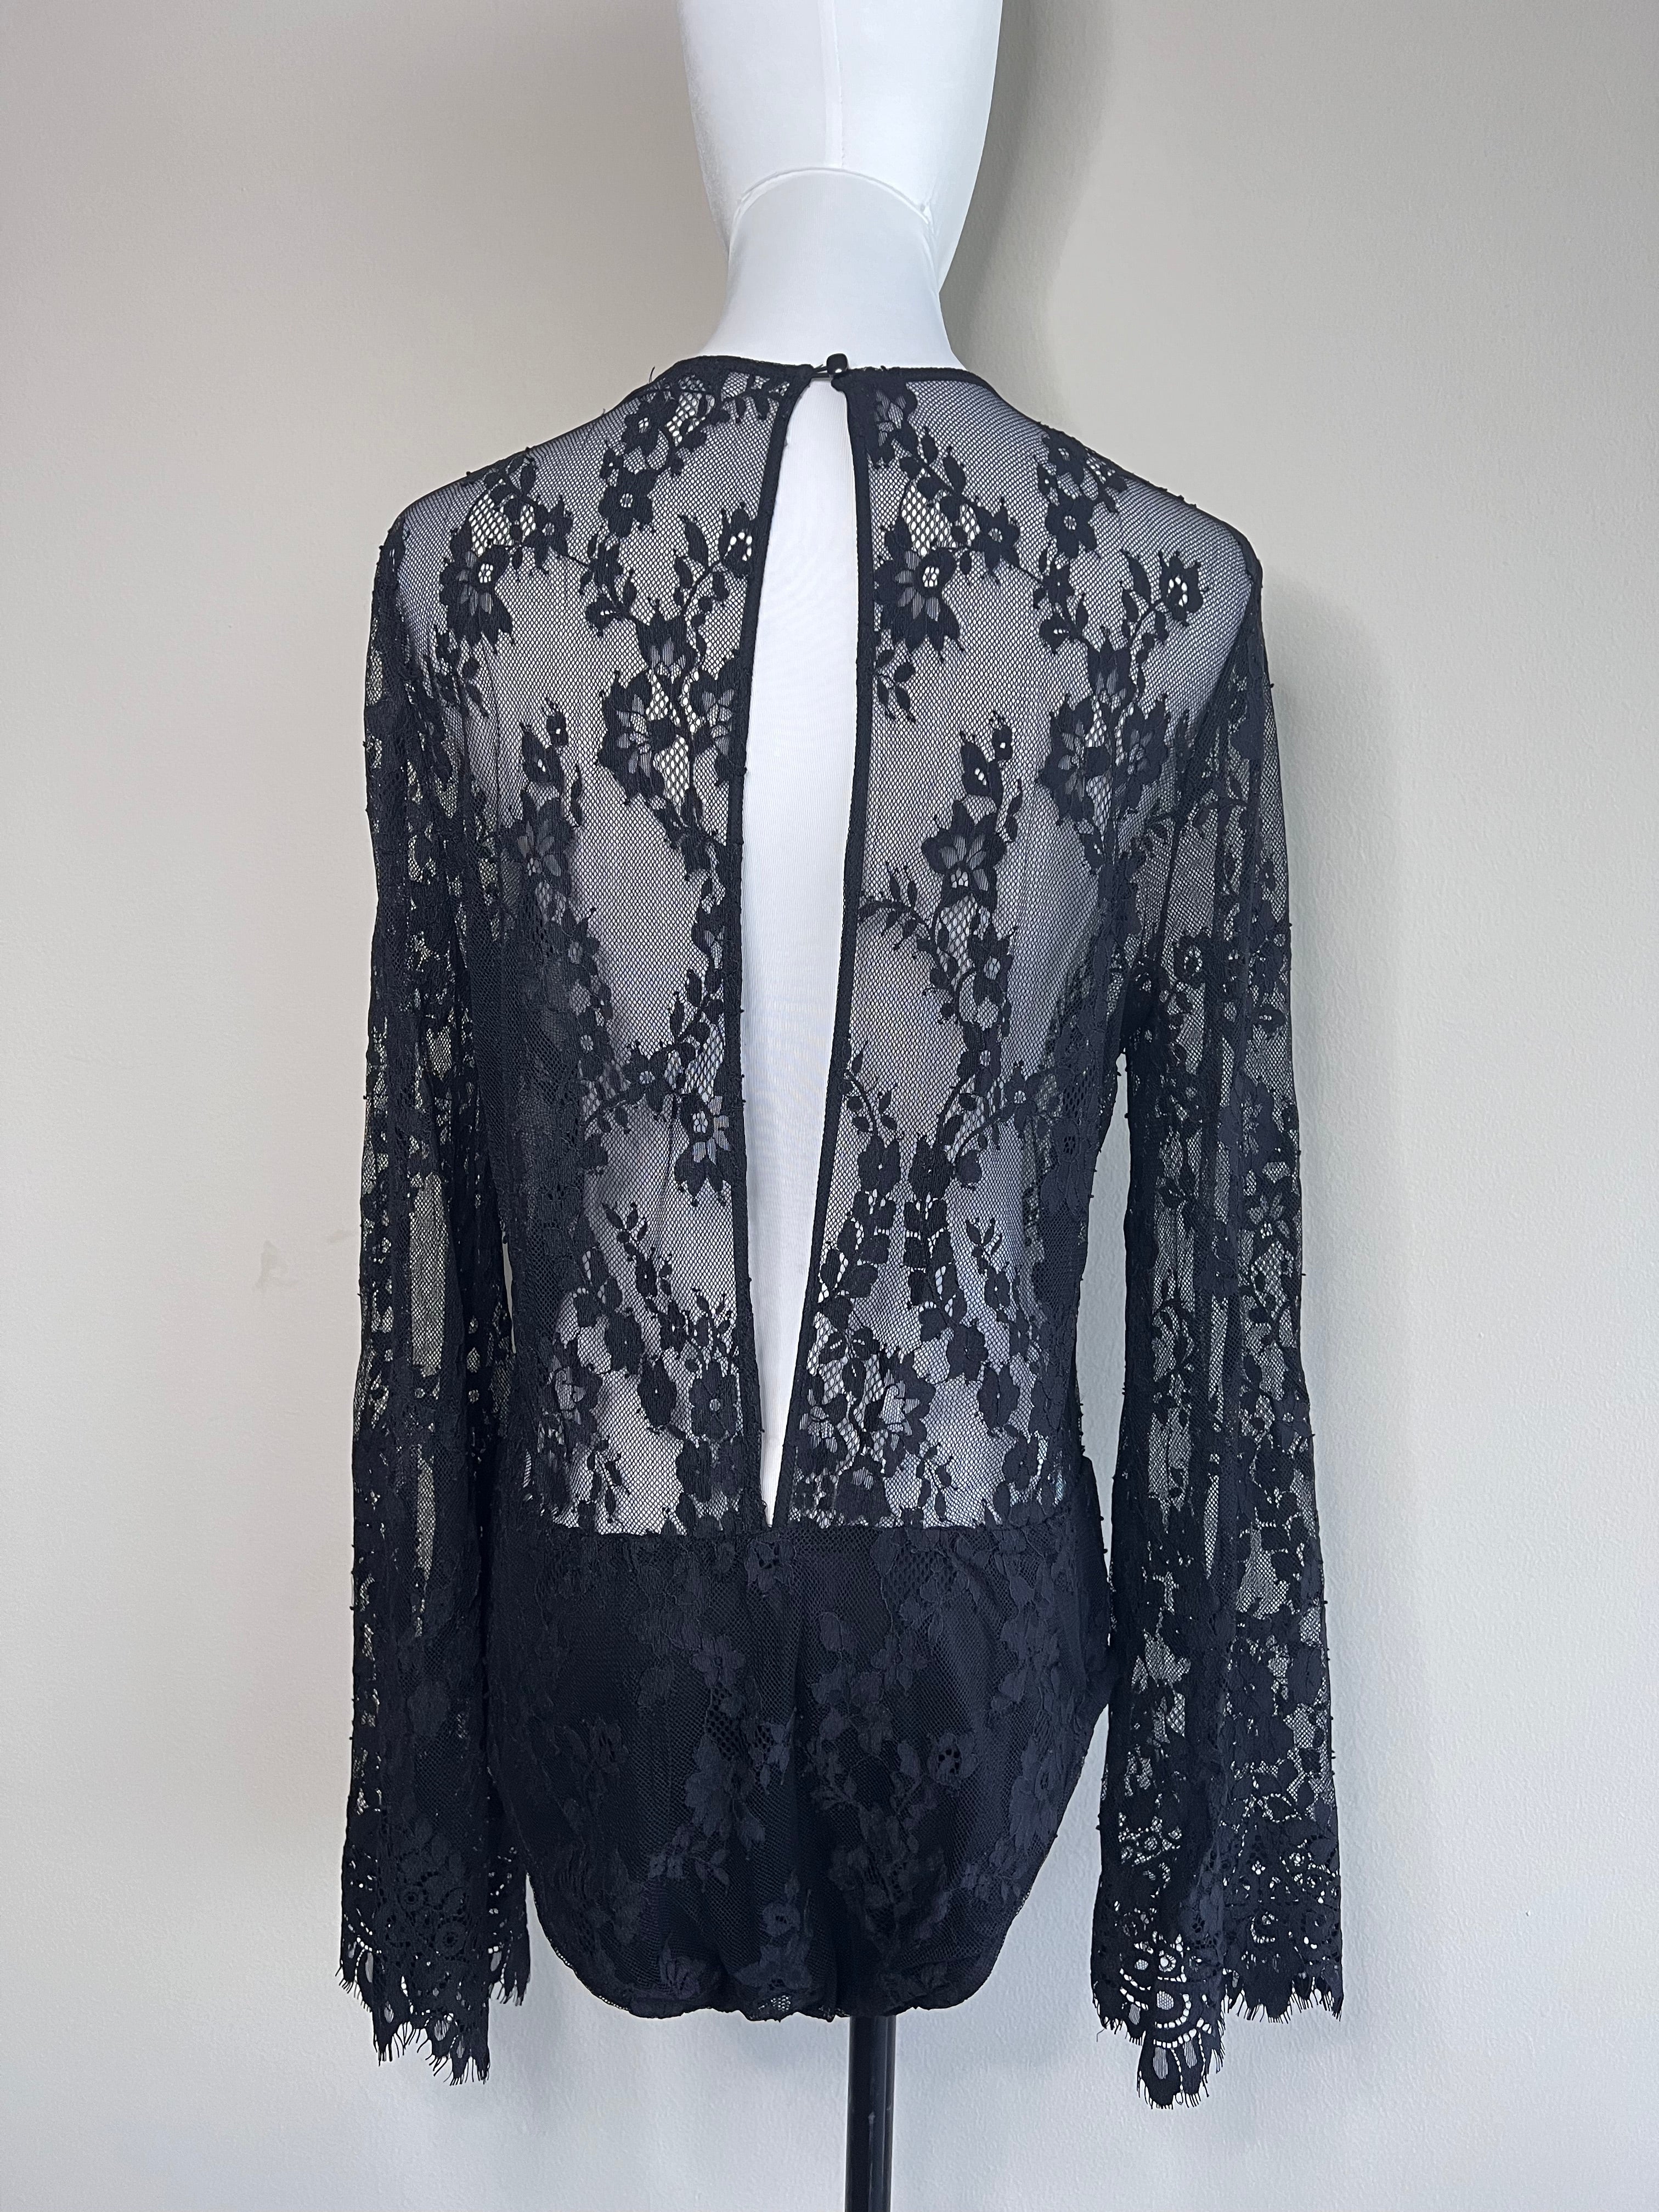 Full lace black bodysuit with open back. - MISS SELFRIDGE